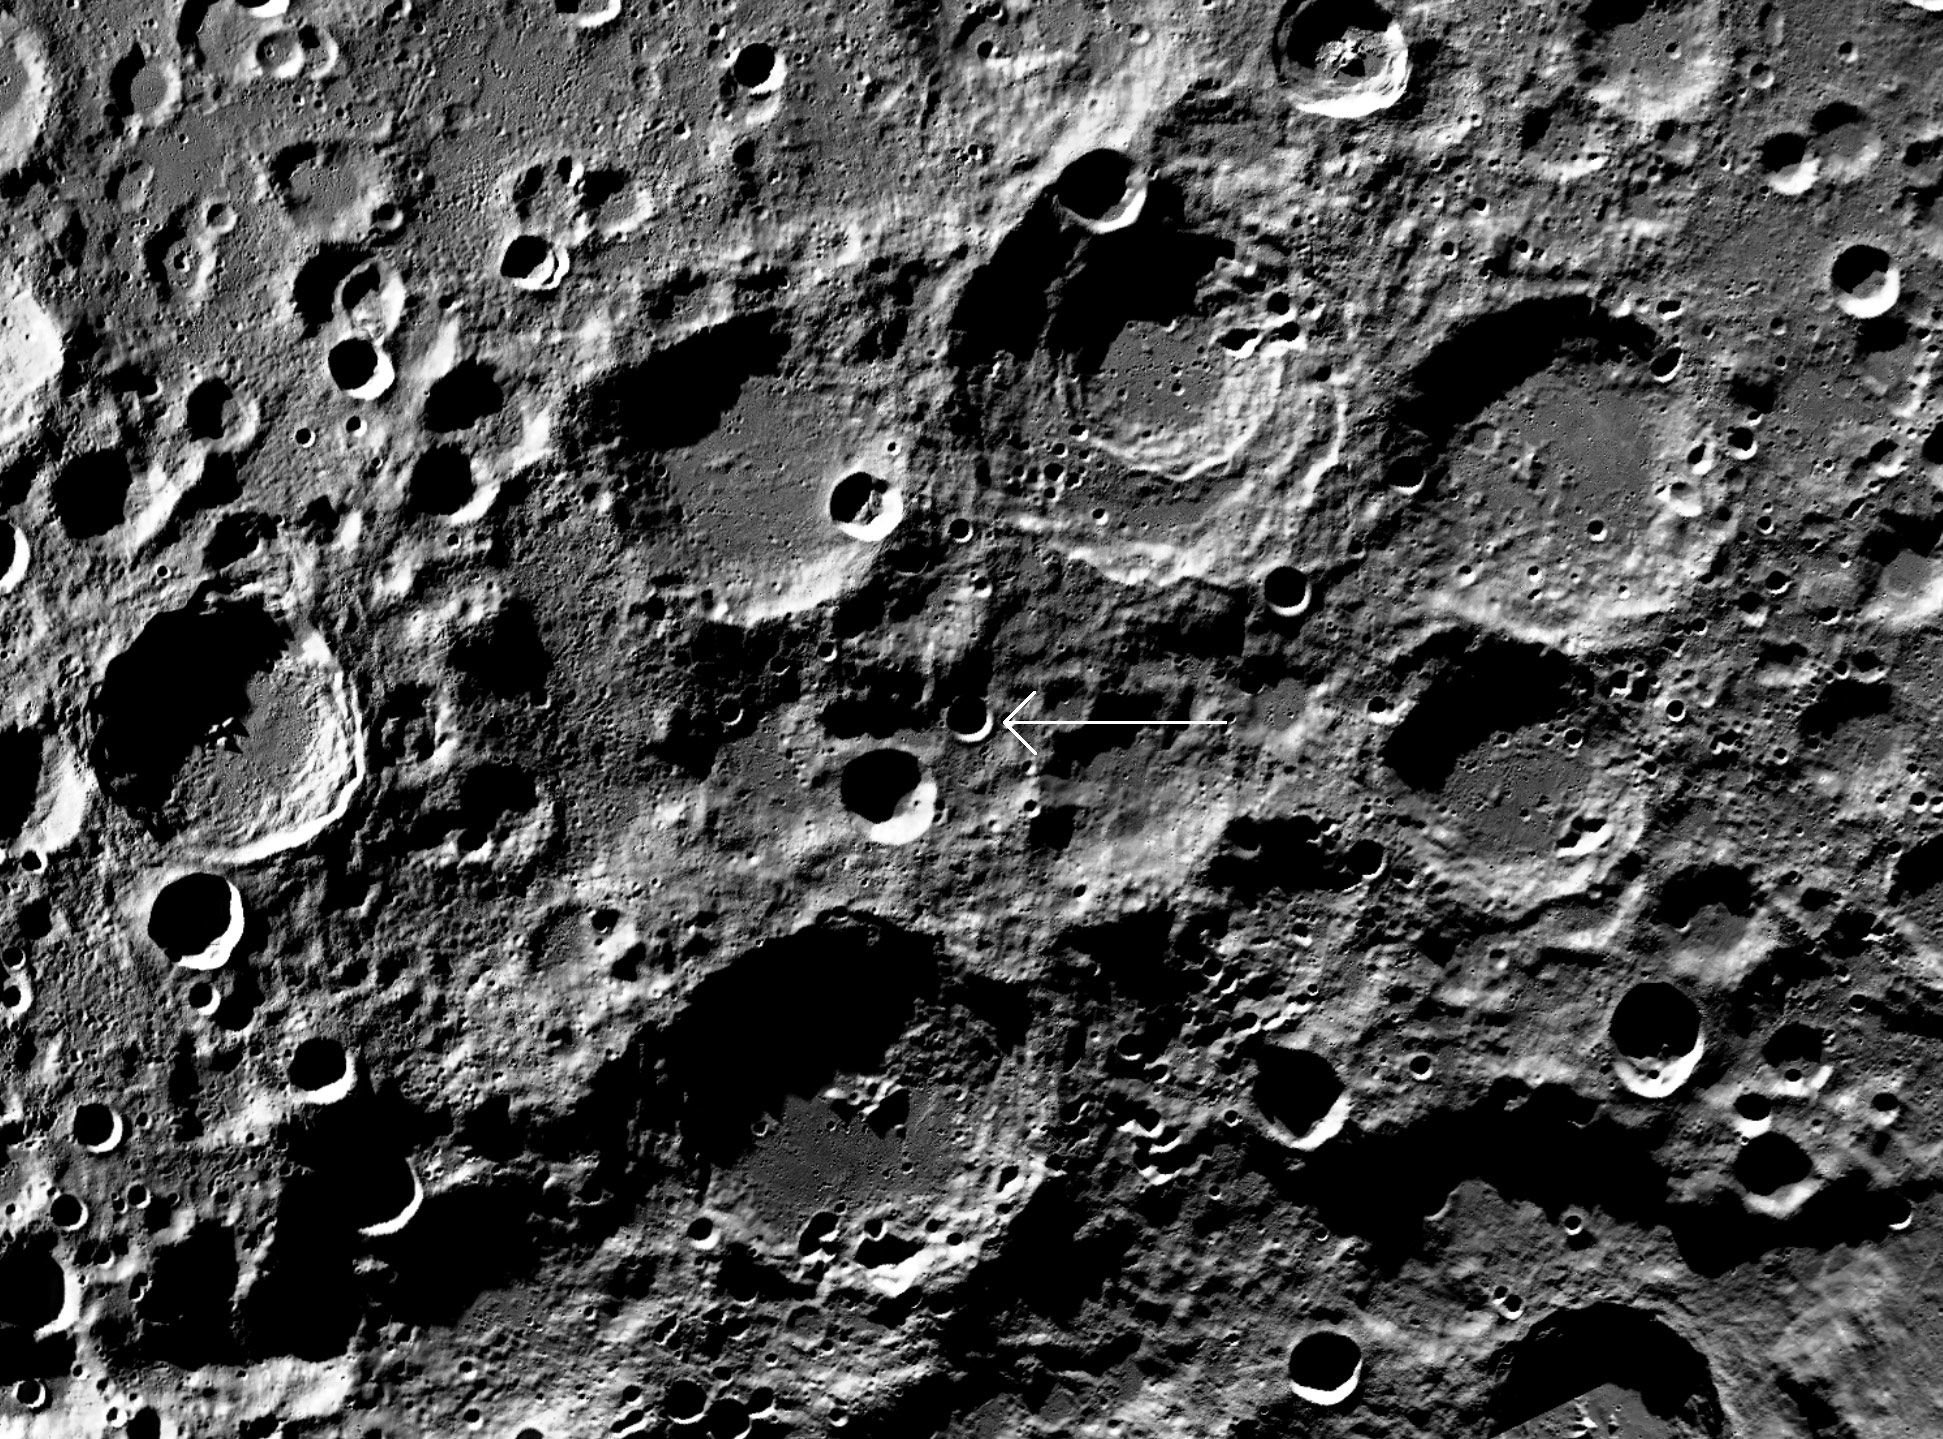 Кратер Лунная поверхность Луны. Меркурий кратеры поверхность планеты. Рельеф Луны кратеры. Кратер Коперник на Луне. Луна поверхность кратеры